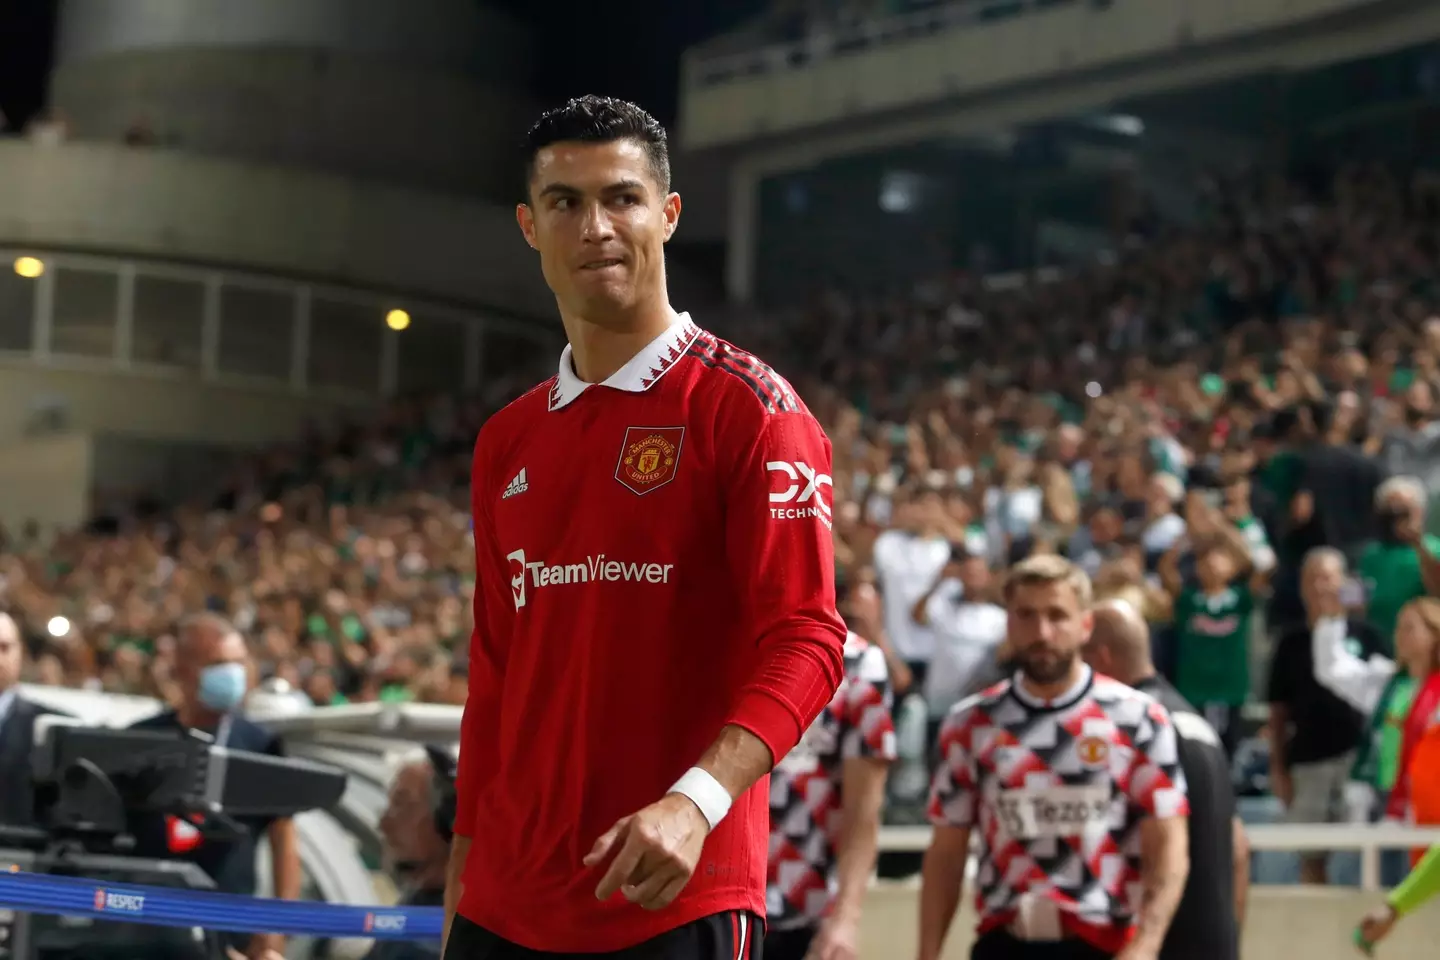 Ronaldo's only scored one goal this season. (Image